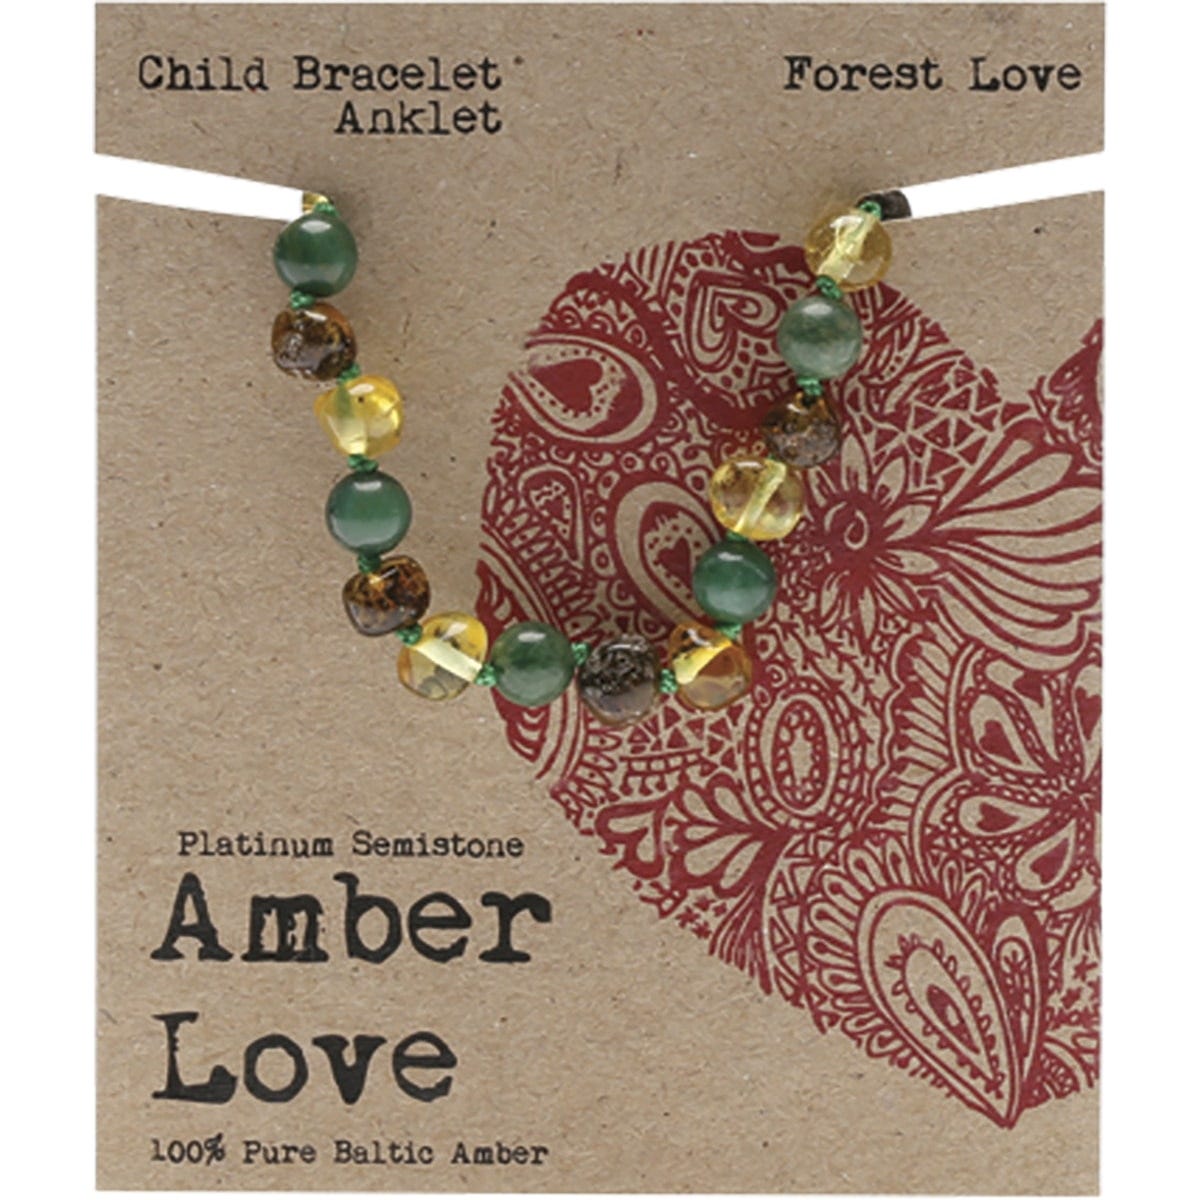 Children's Bracelet/Anklet 100% Baltic Amber Forest